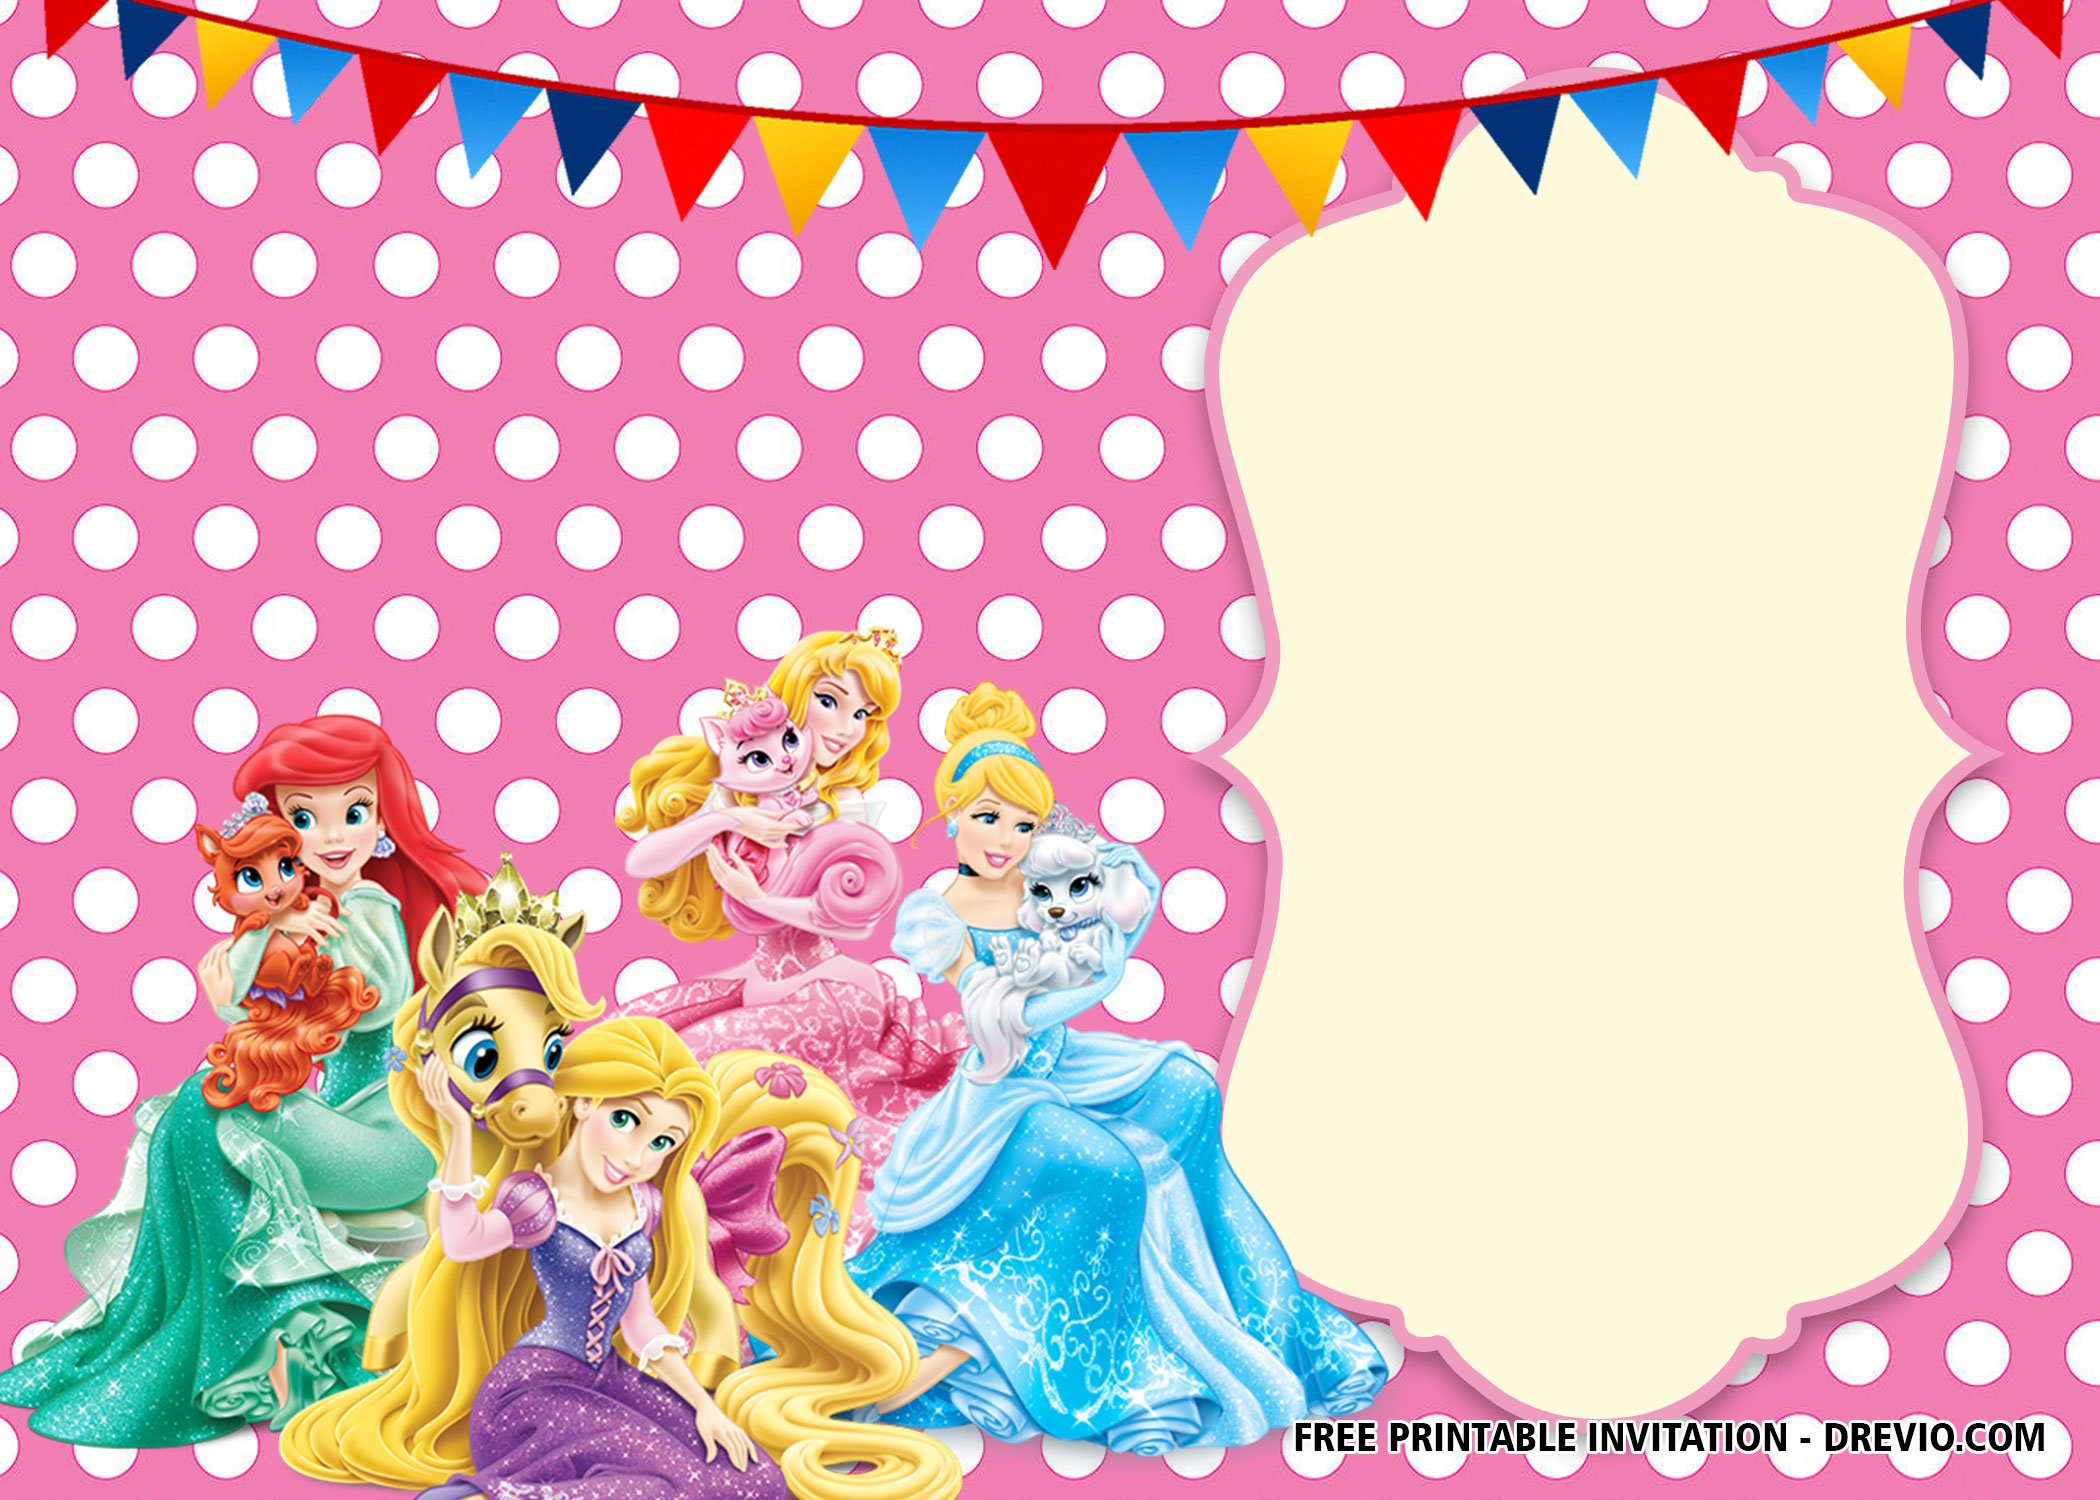 Disney Princess Birthday Printables